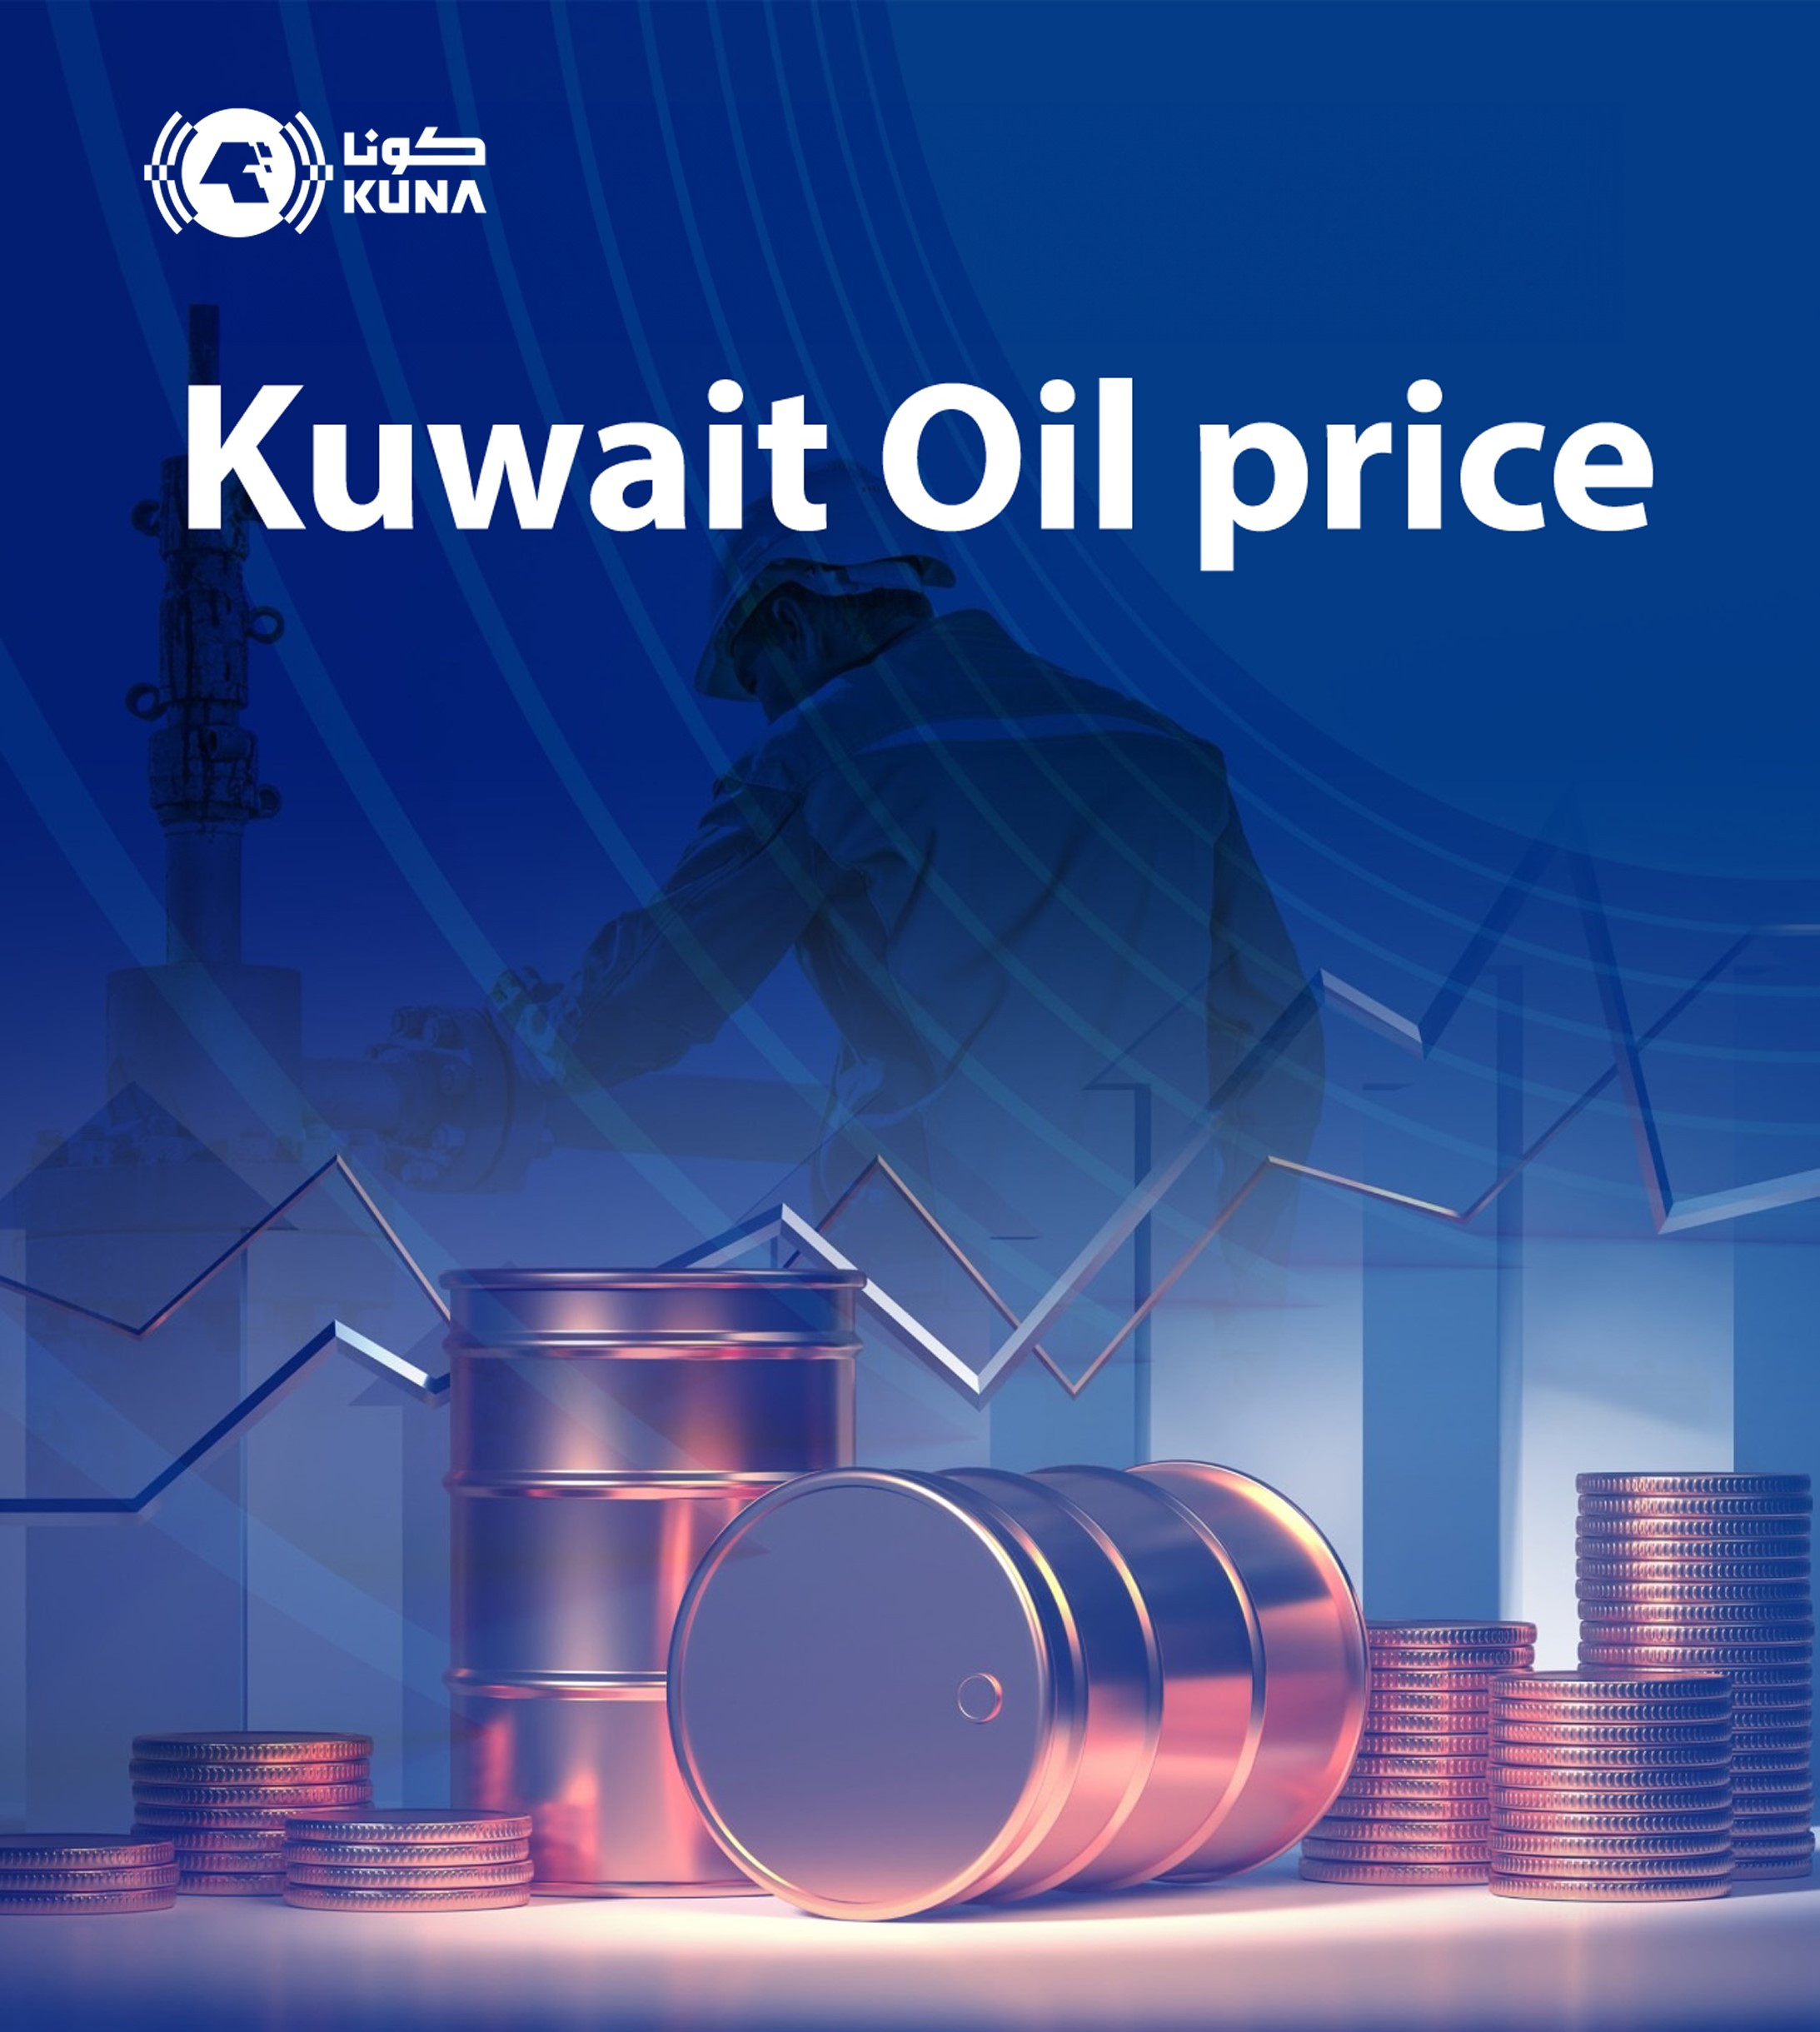 Kuwait oil price rises 14 cents to USD 85.96 pb - KPC                                                                                                                                                                                                     